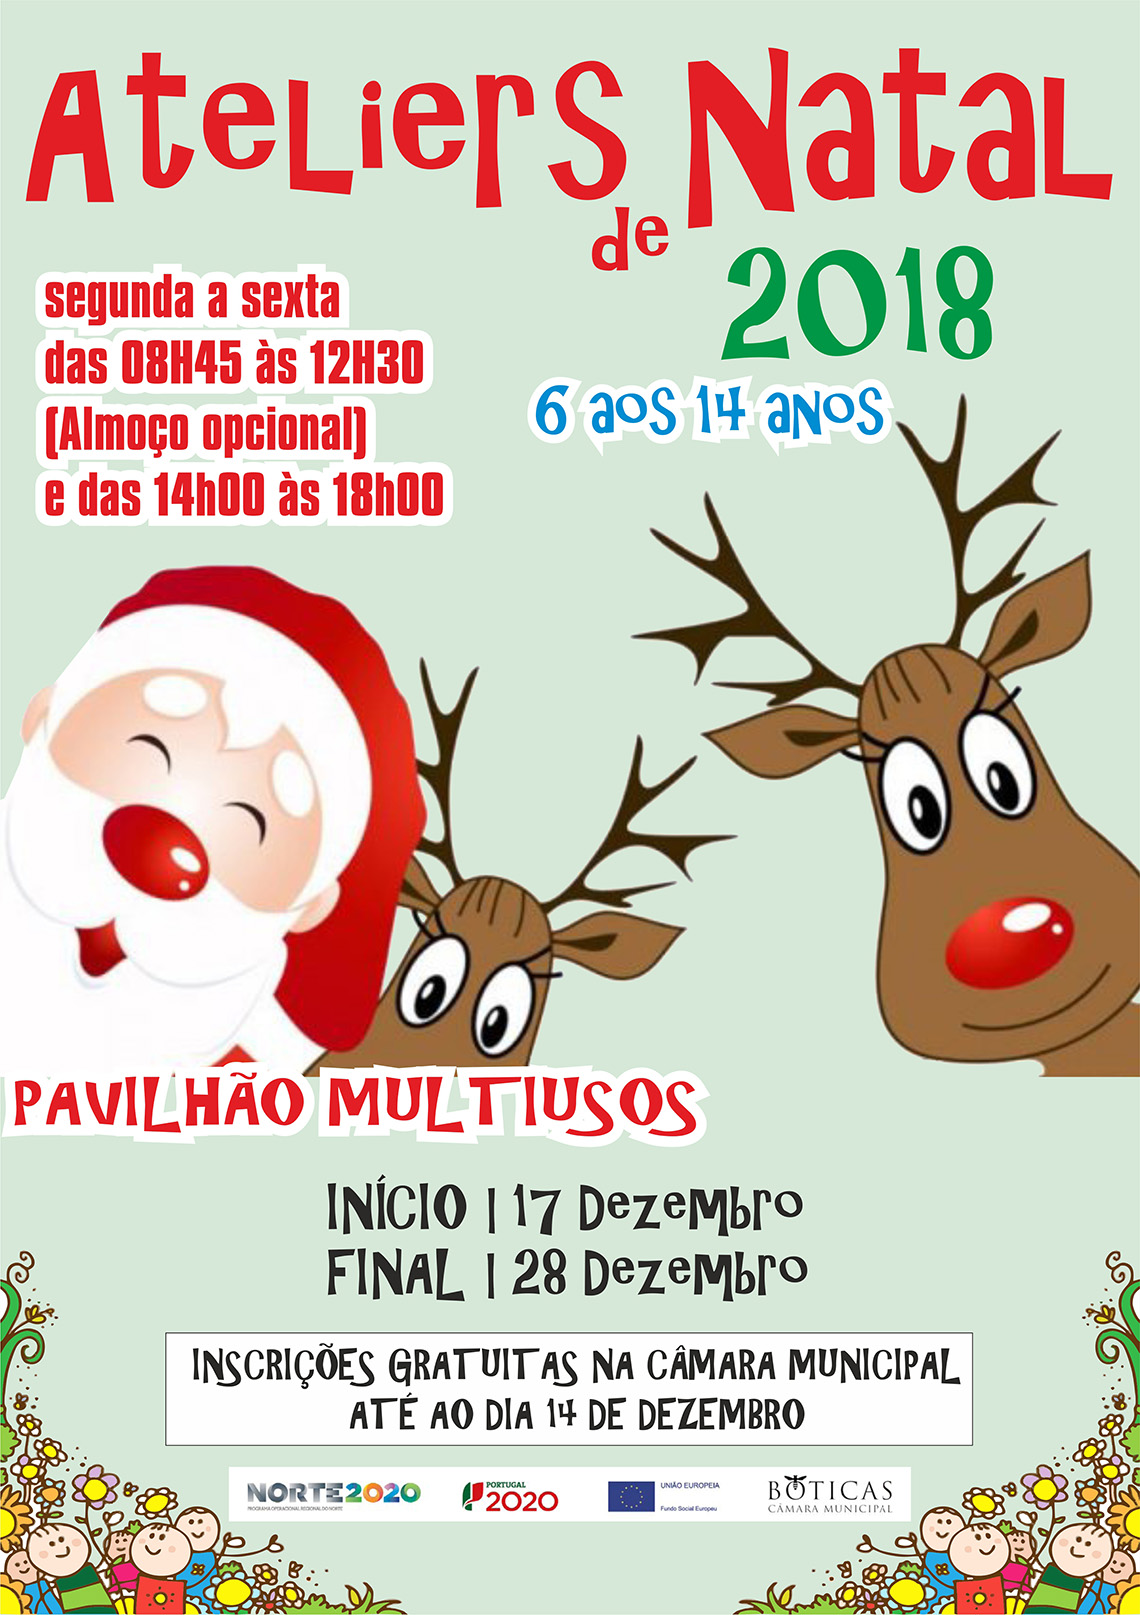 Ateliers de Natal 2018